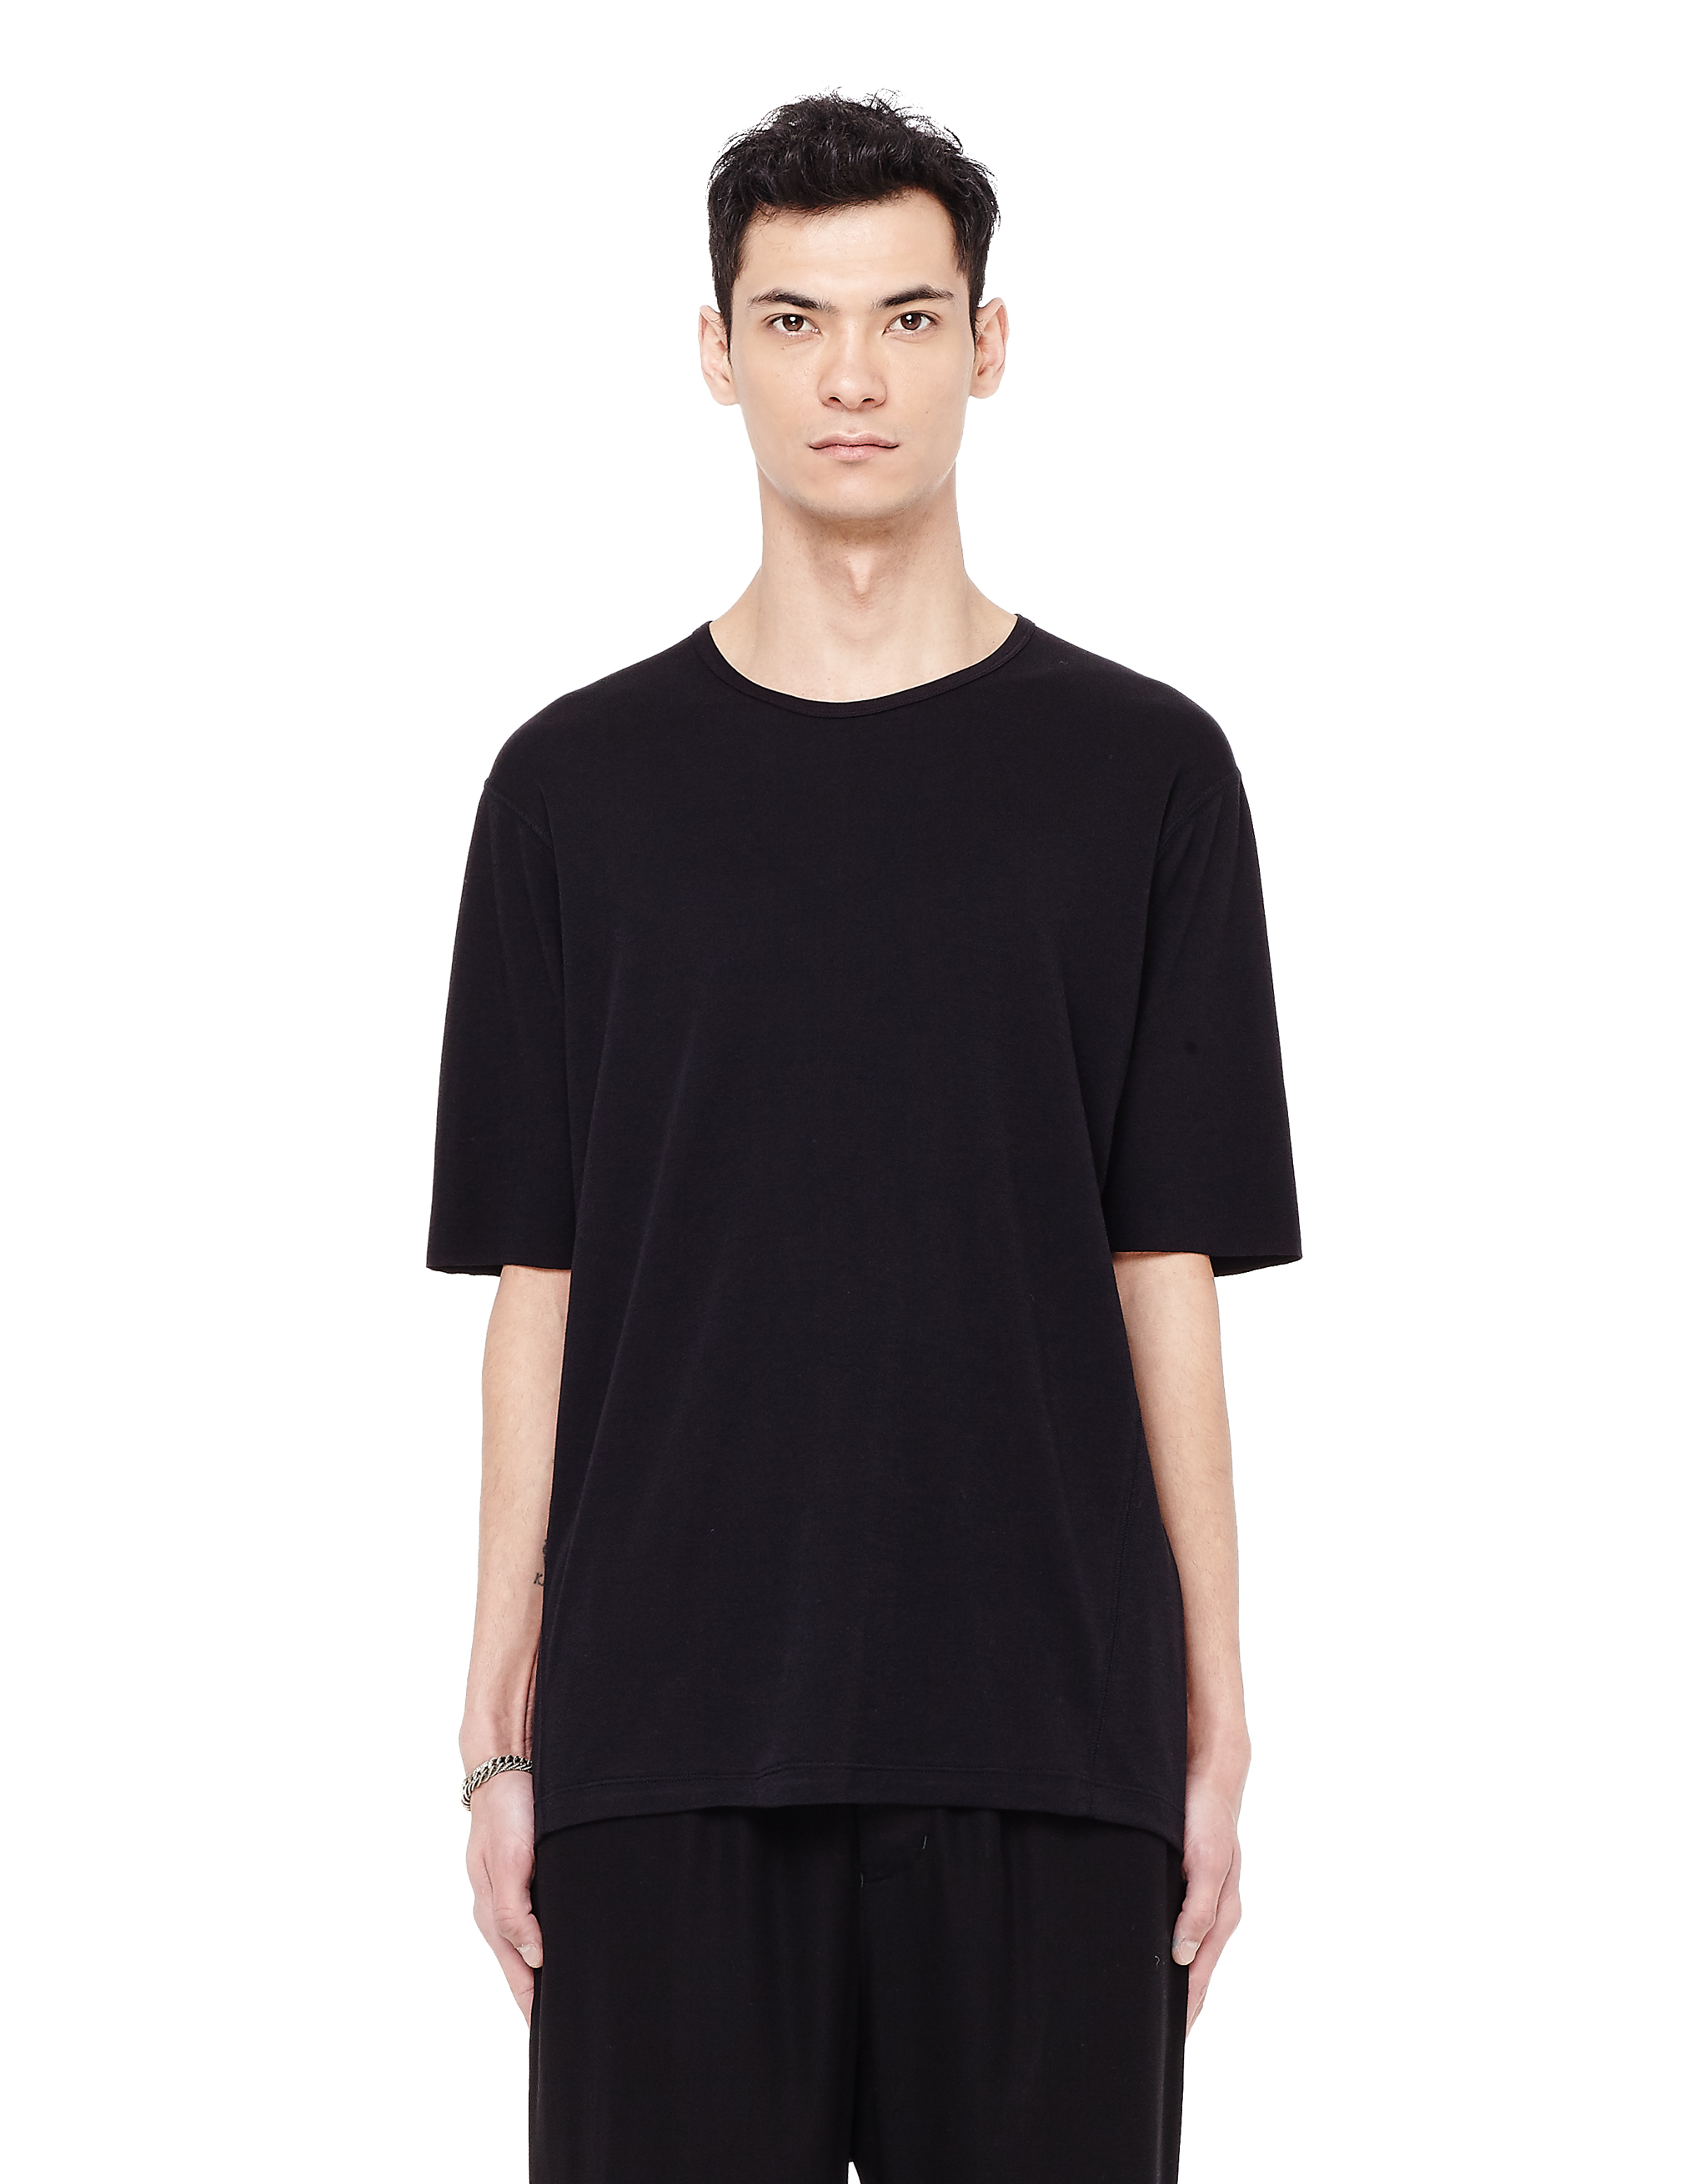 Buy The Viridi-Anne men black raw hems cotton t-shirt for $300 online ...